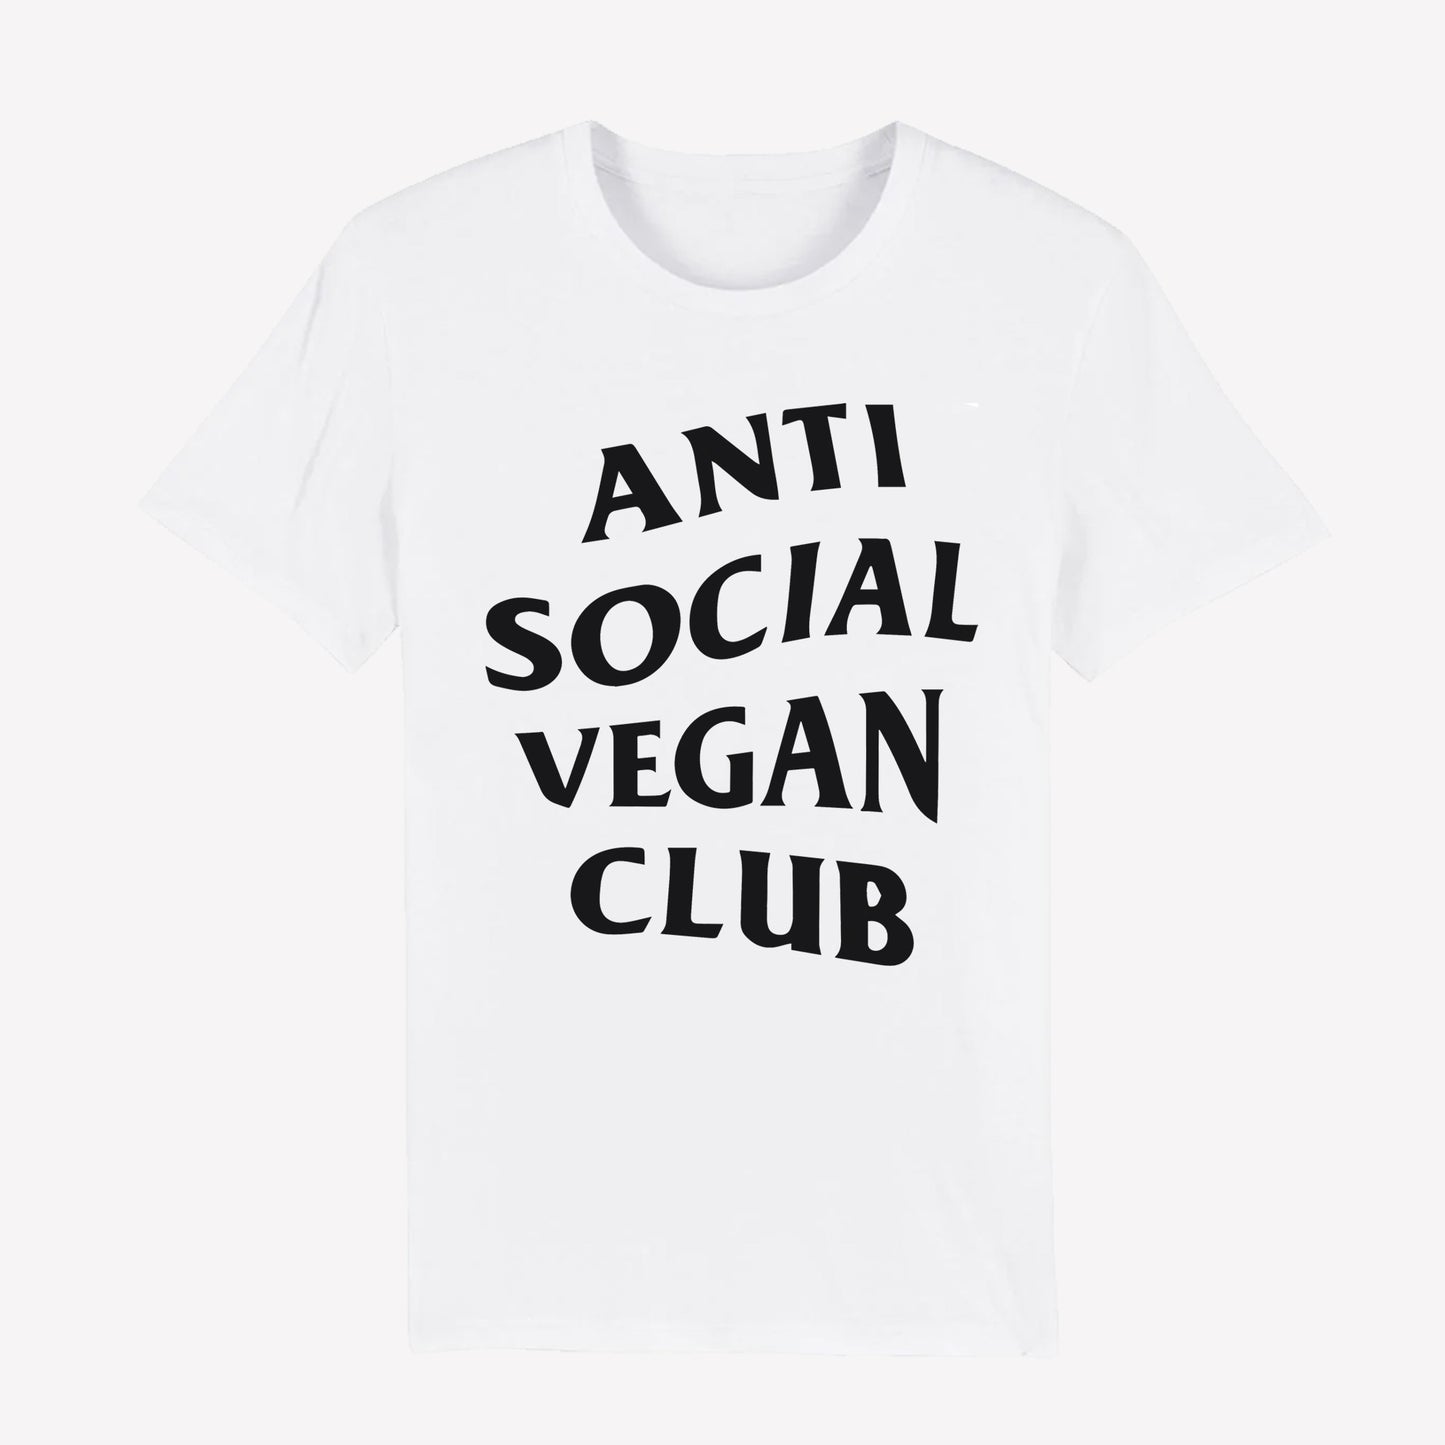 Anti Social Vegan Club T-Shirt White - Anti Social Vegan Club